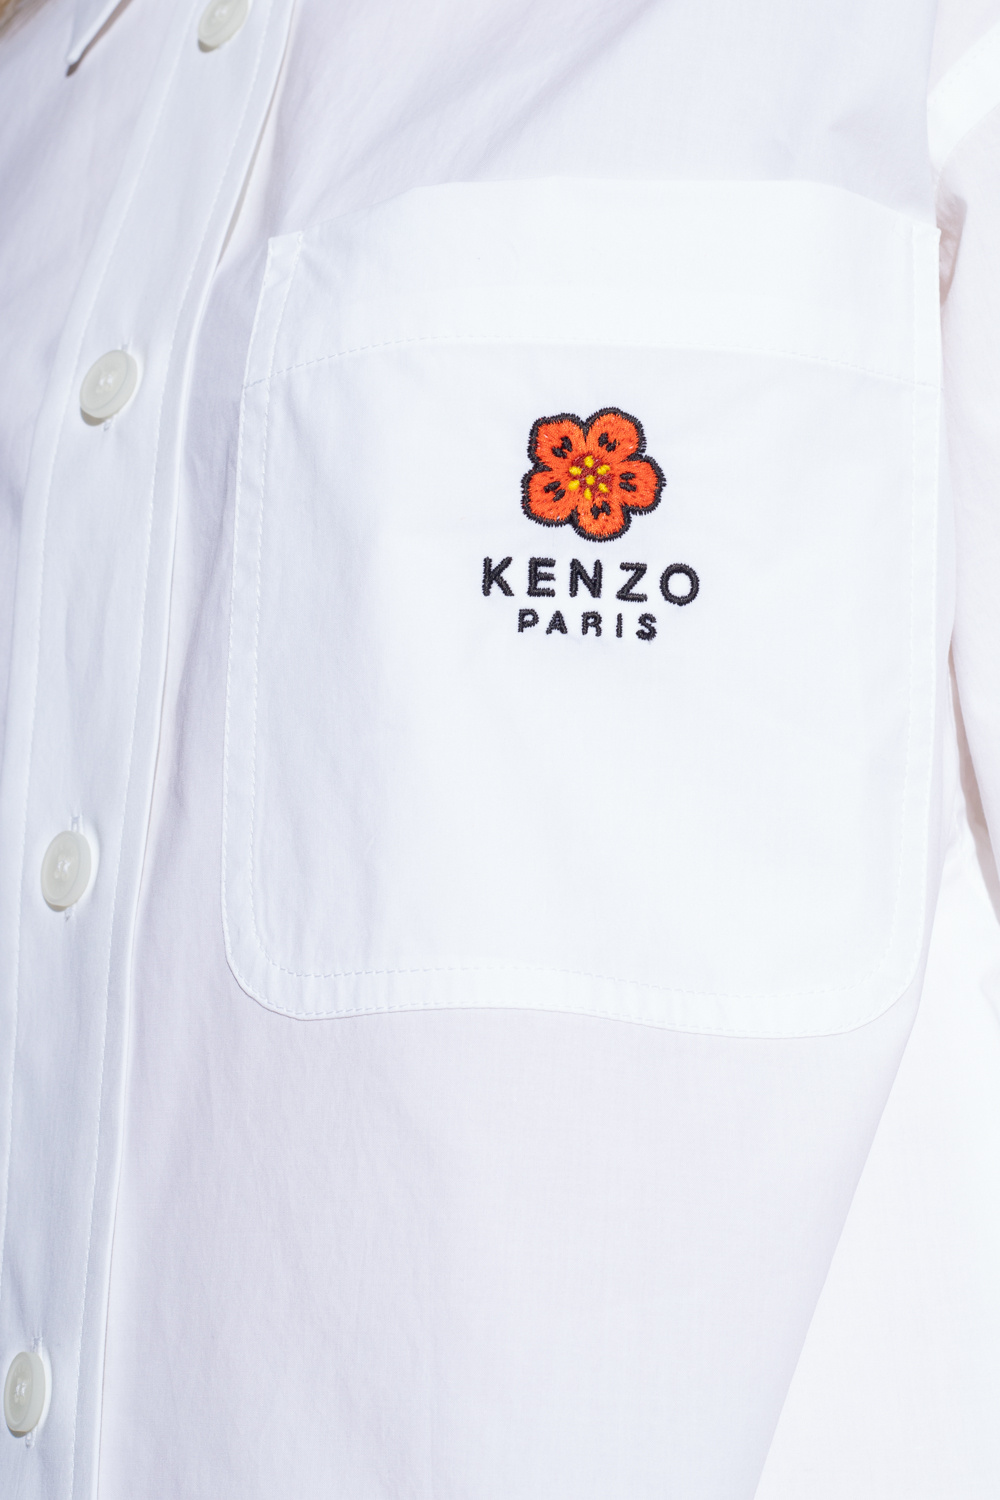 Kenzo Parlor T-shirts & Jerseys